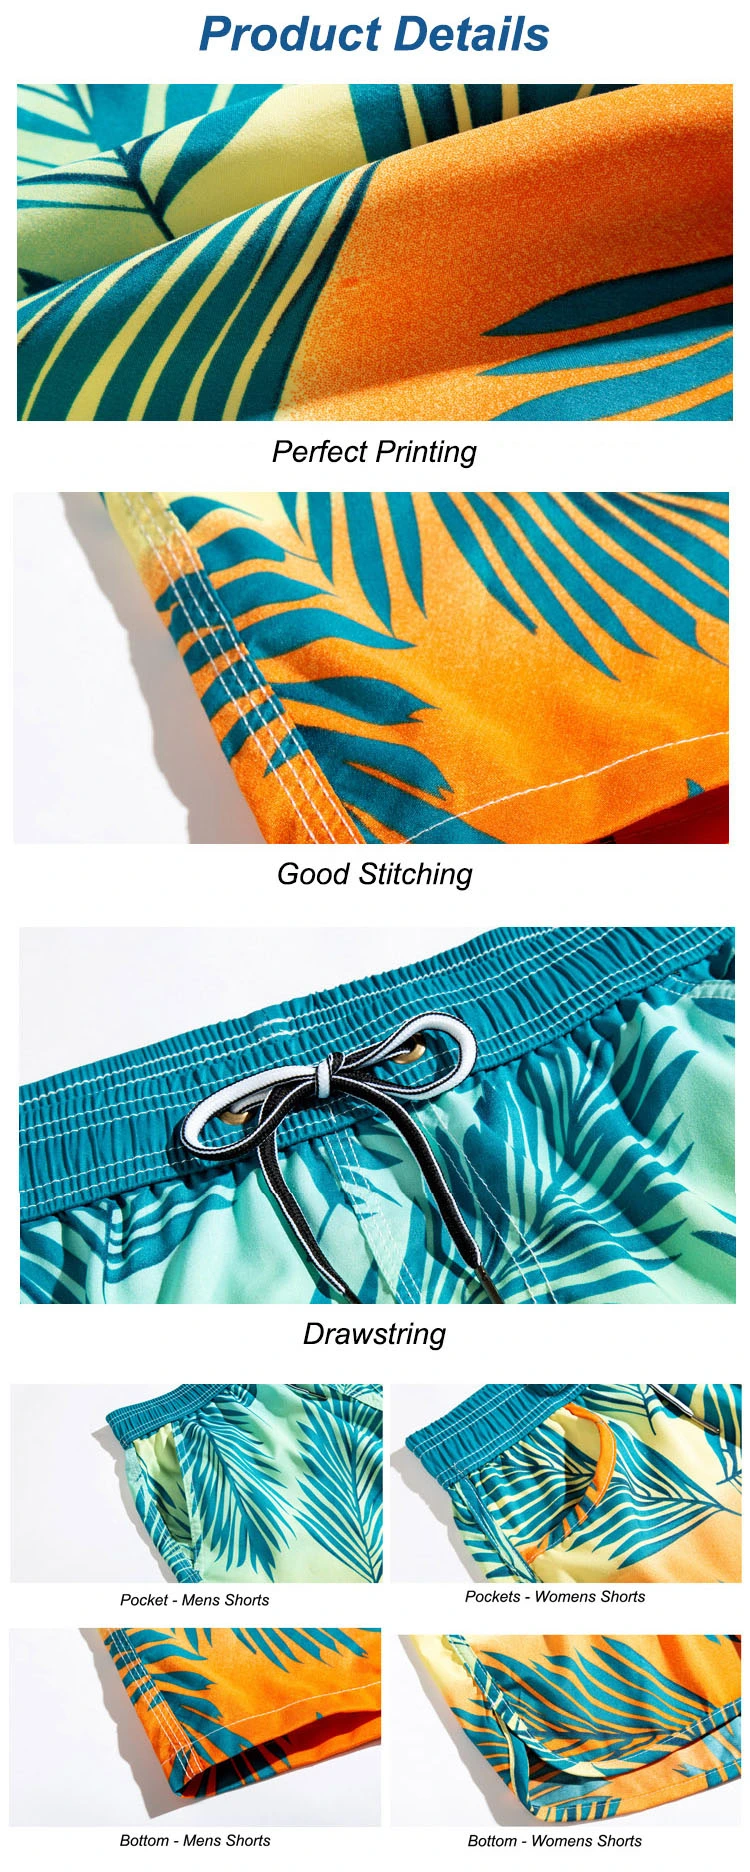 Stocked Promotional Summer Beach Hawaiian Printed Custom Men's Swimming Trunks